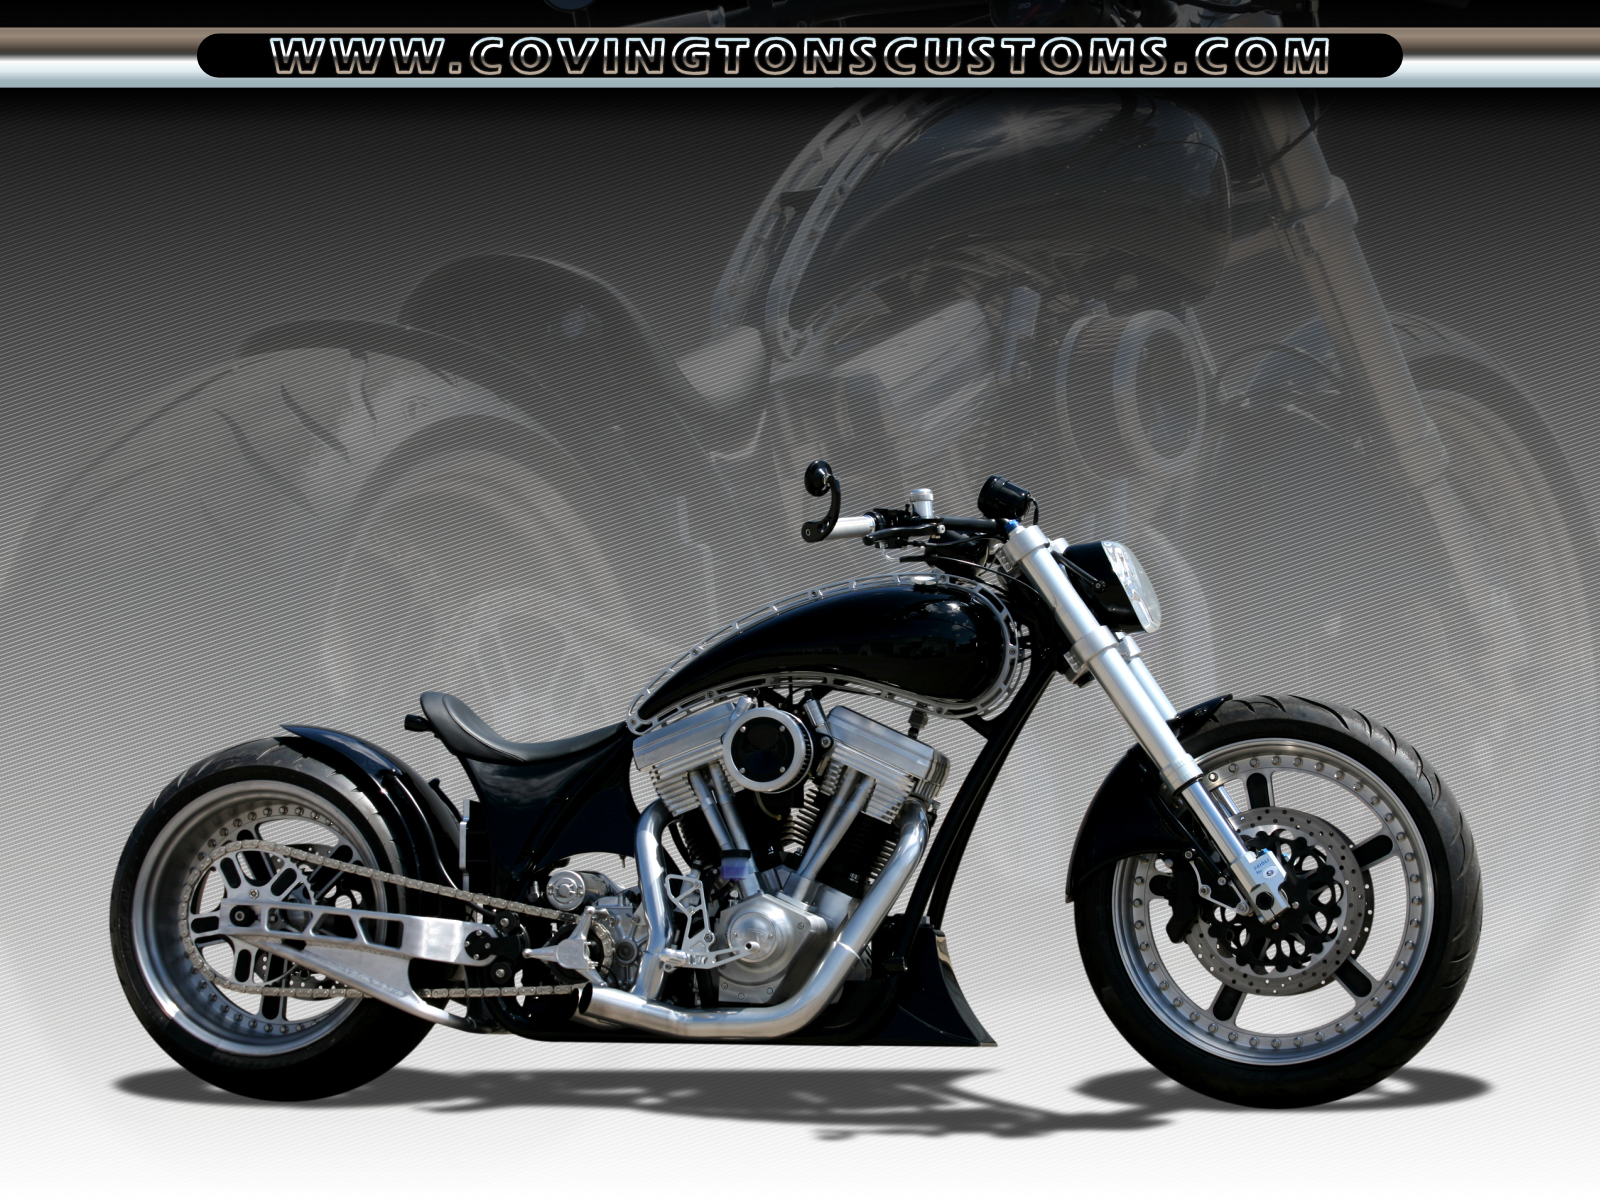 Covingtons Custom Motorcycle WallPaper 53jpg